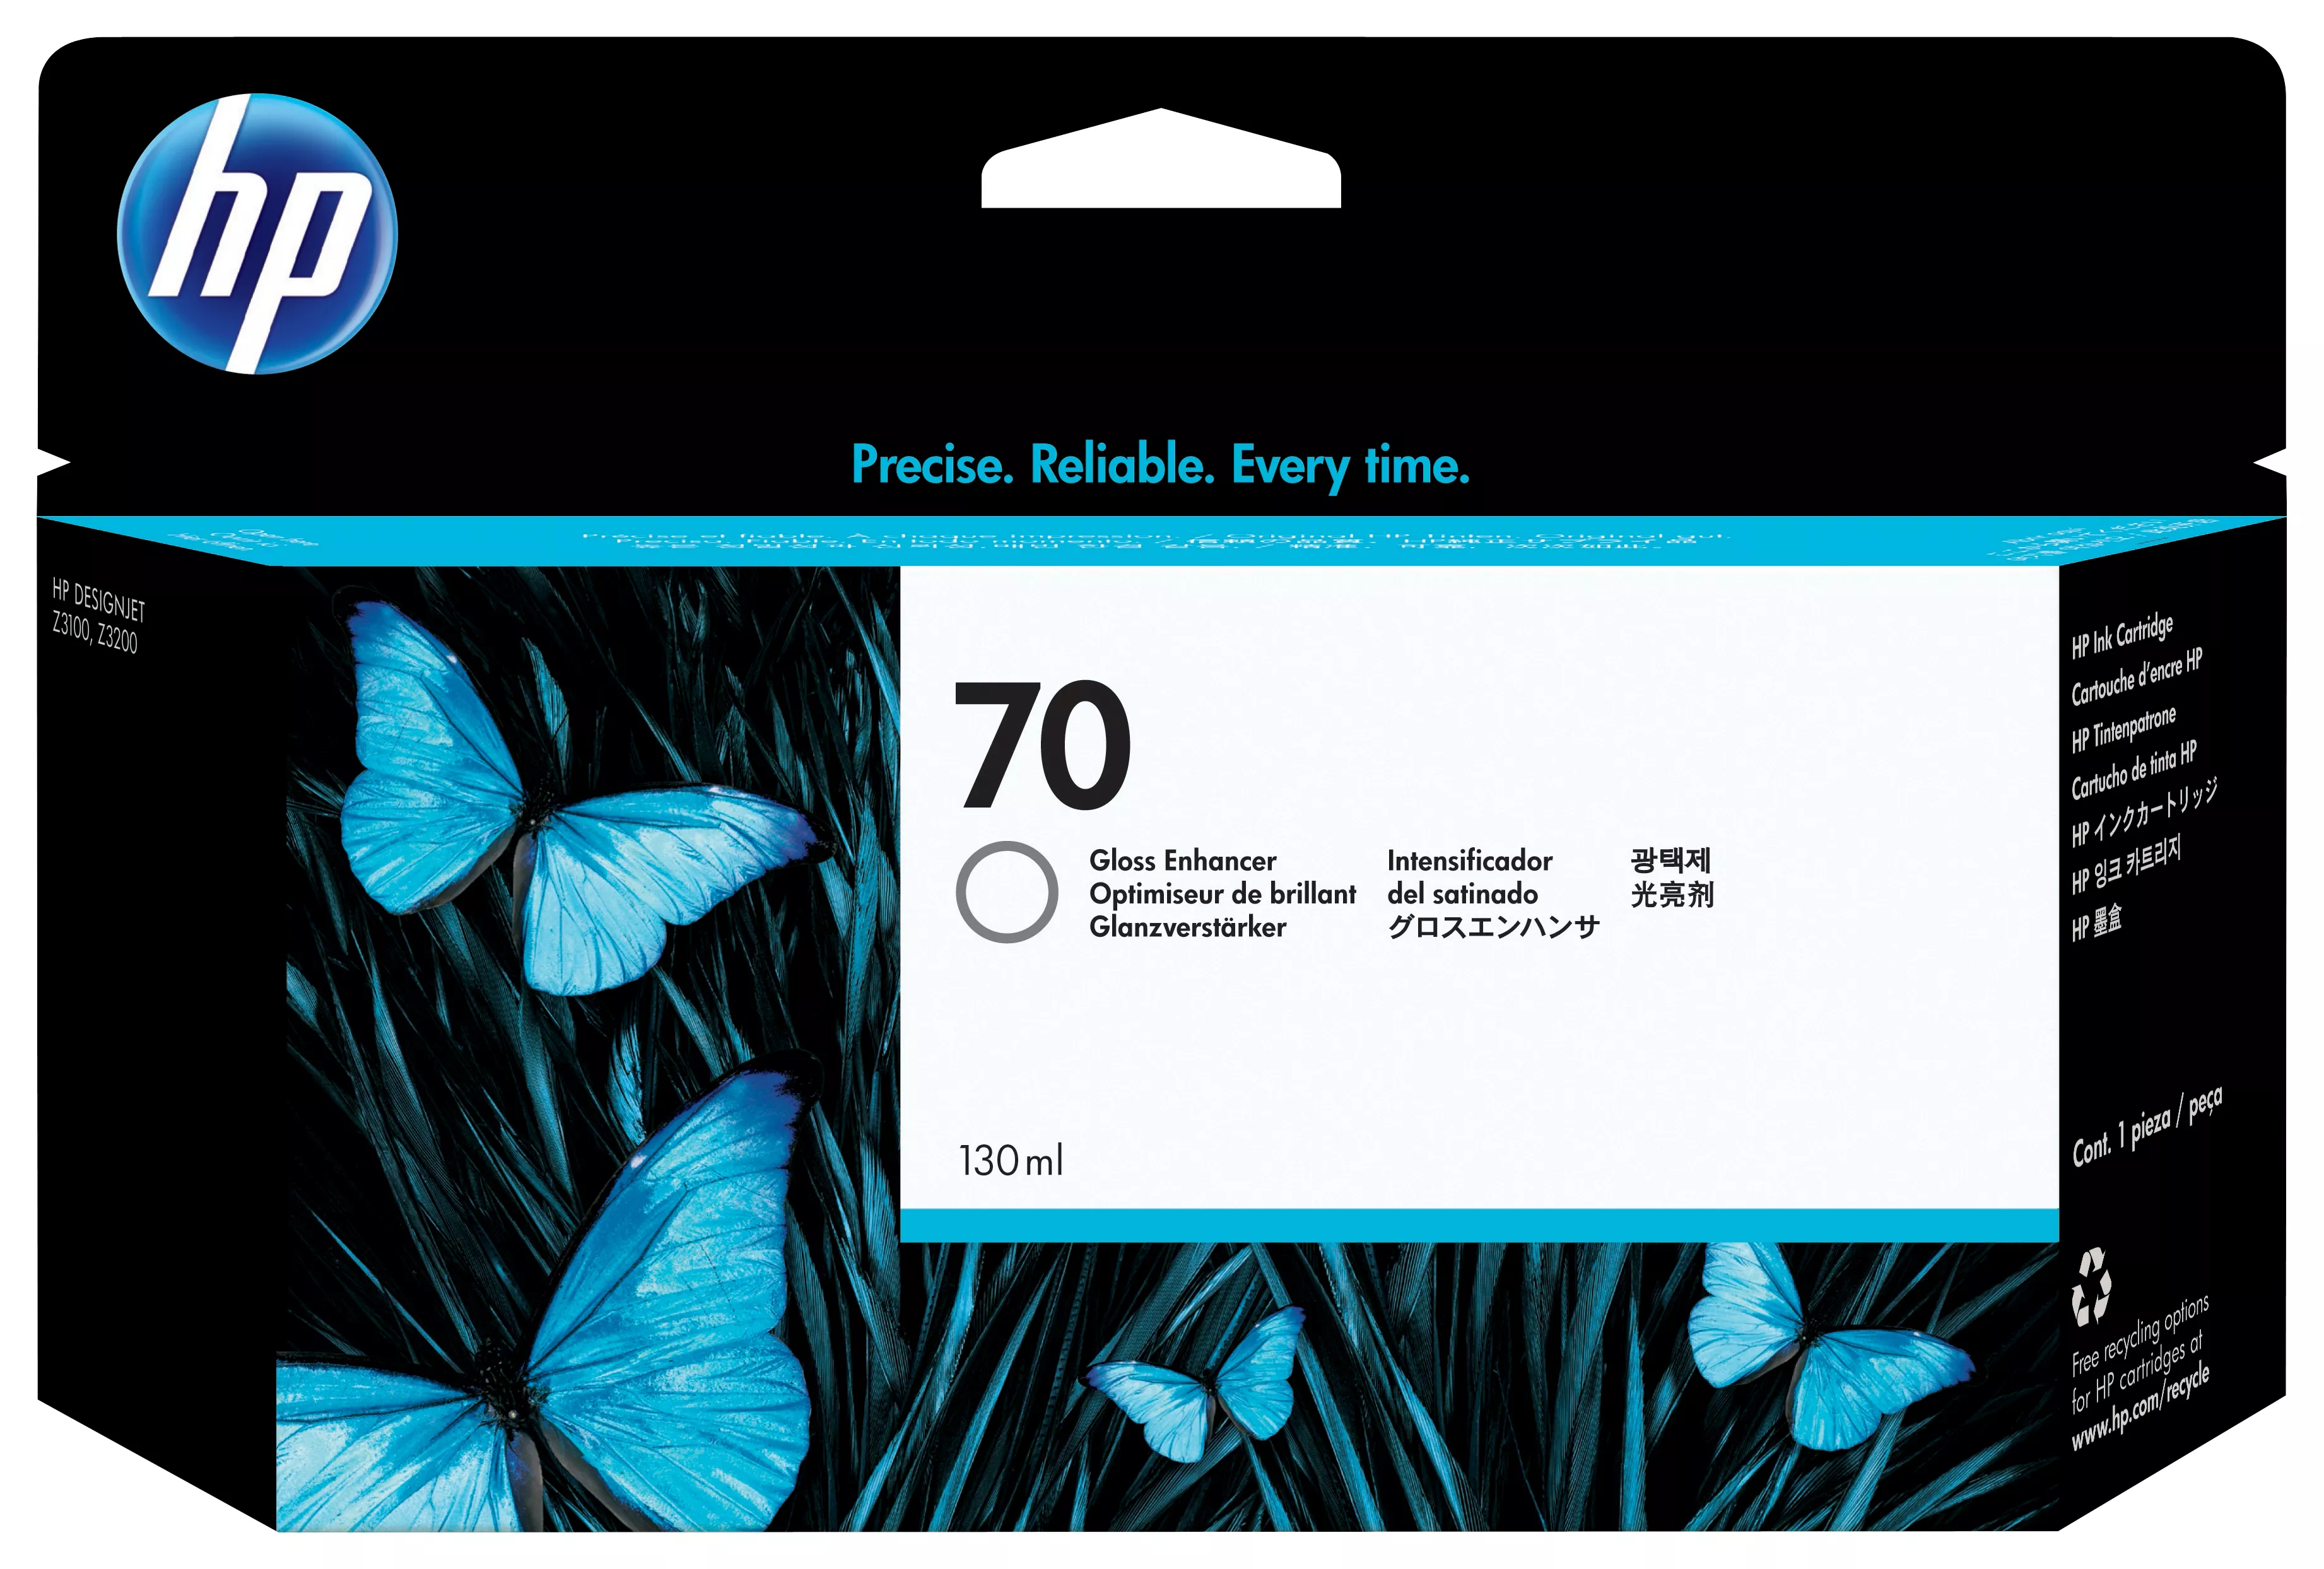 Vente HP 70 original Ink cartridge C9459A gloss enhancer HP au meilleur prix - visuel 2